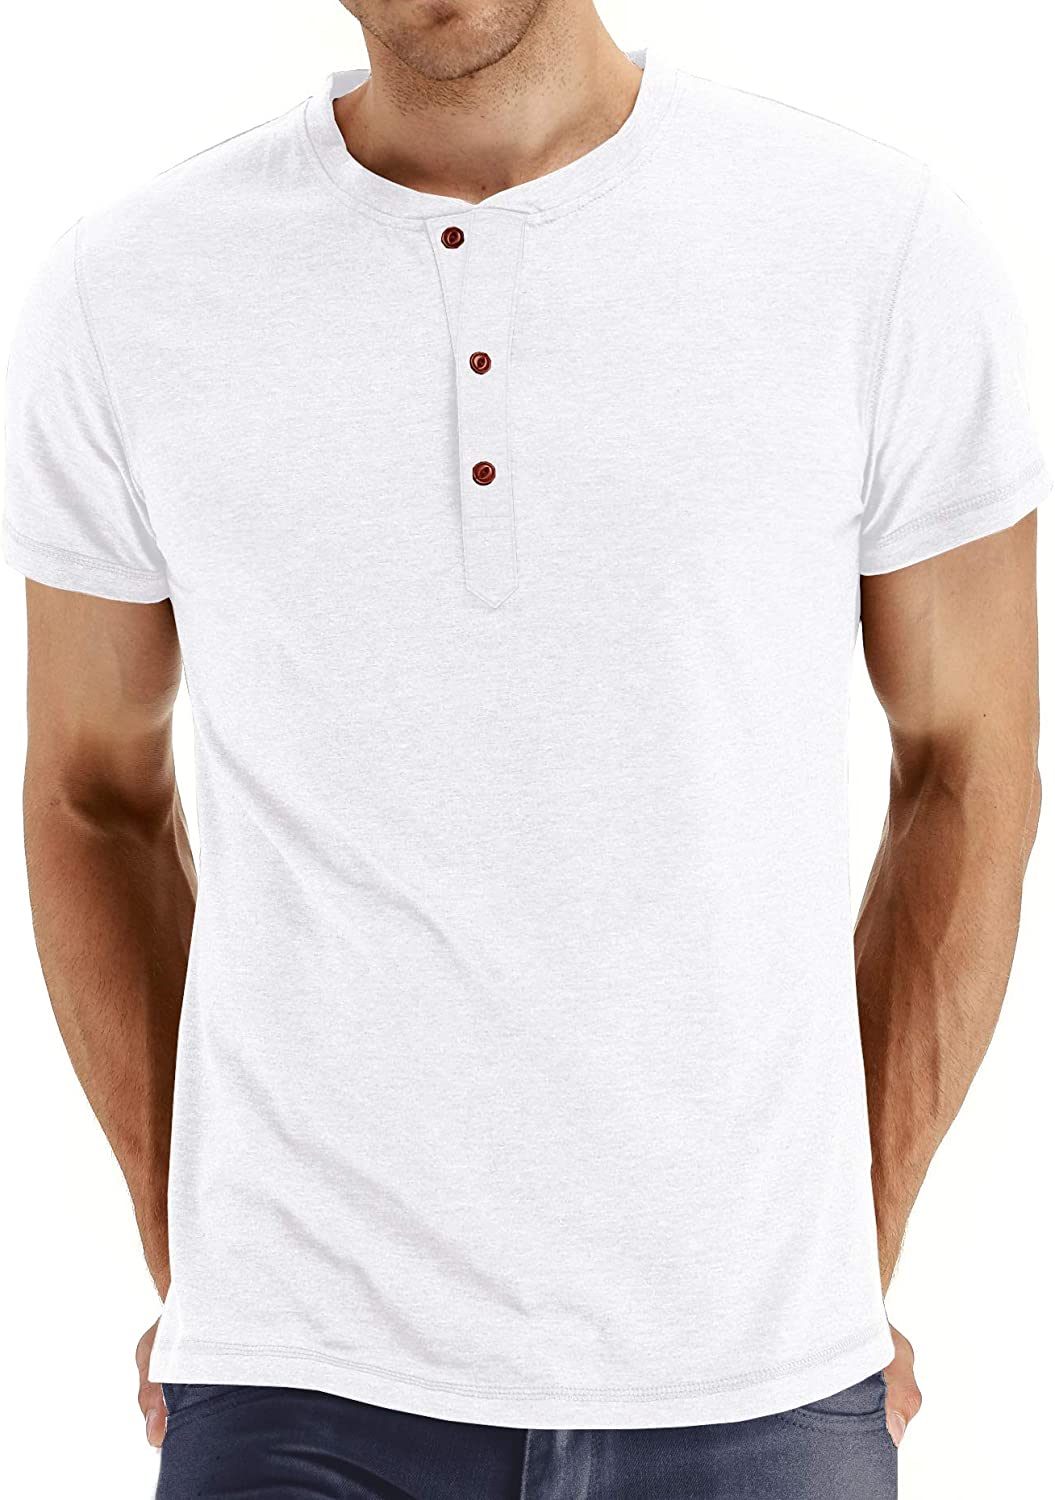 T Shirt Men's Short Sleeve Casual Cotton O Neck Shirt Vintage Tops